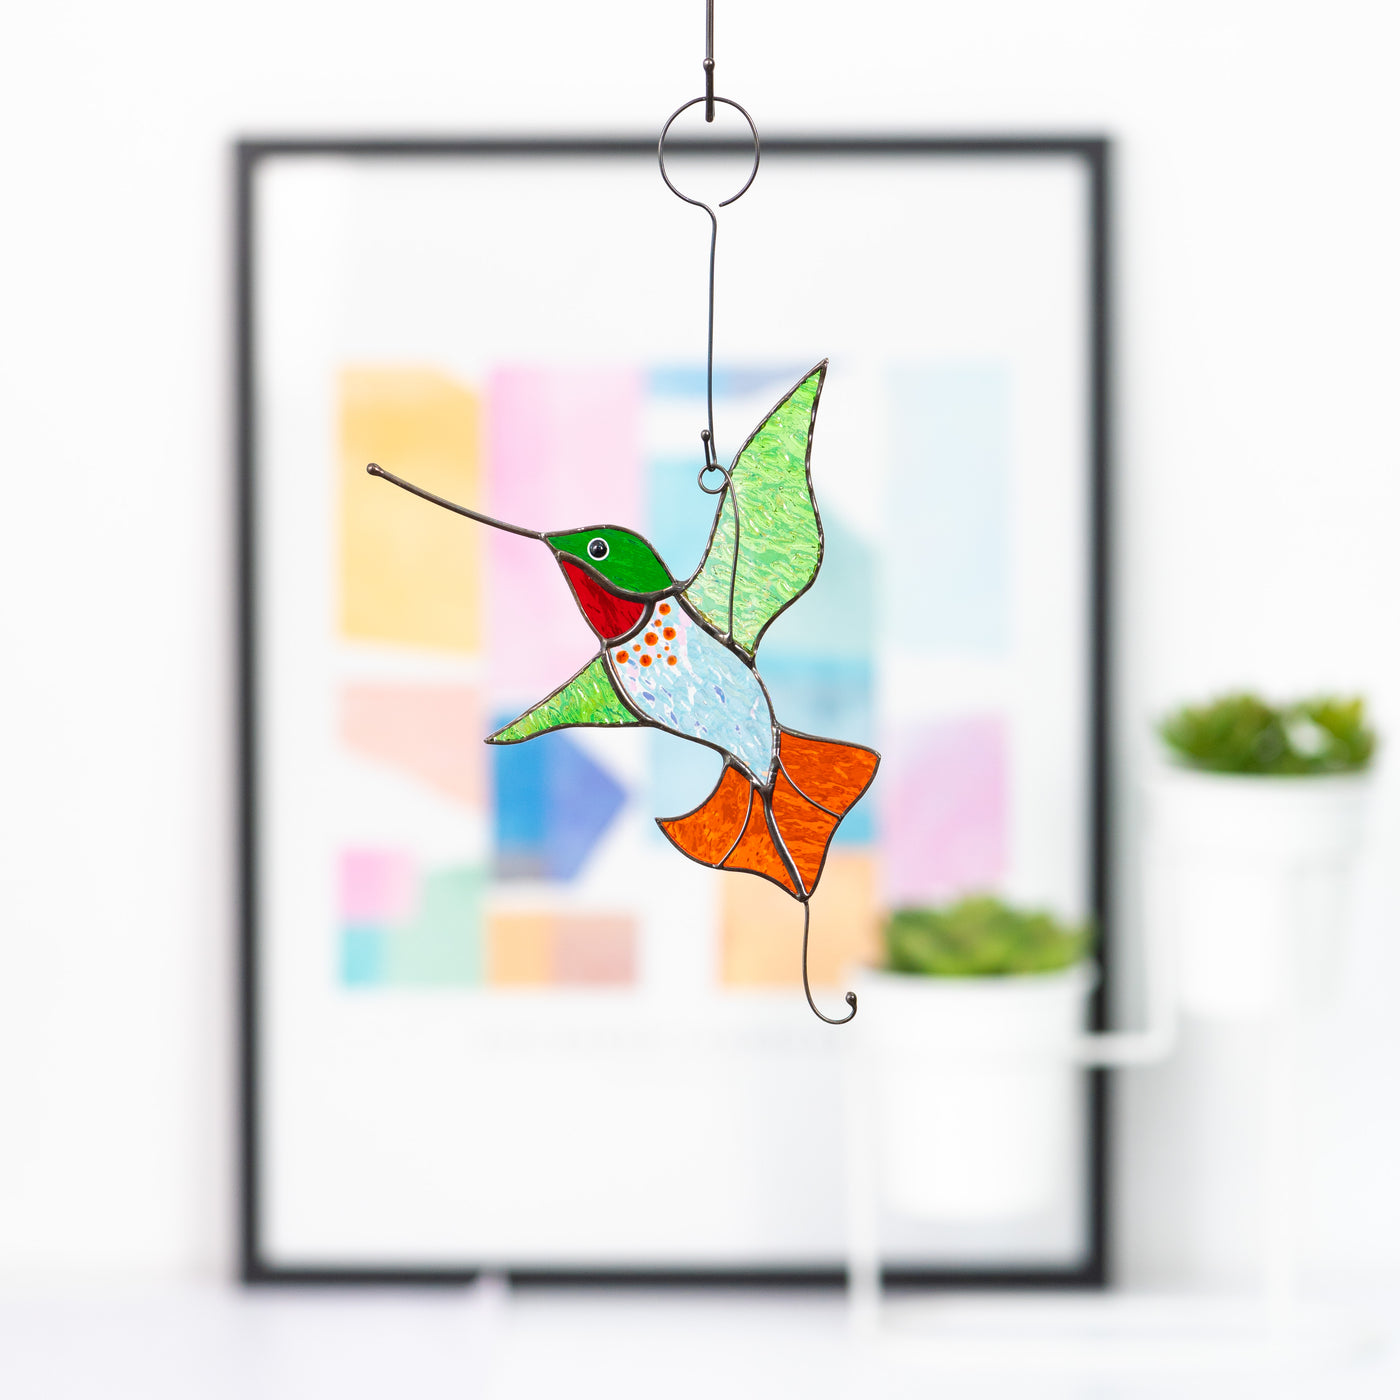 Handcrafted stained glass shining hummingbird suncatcher